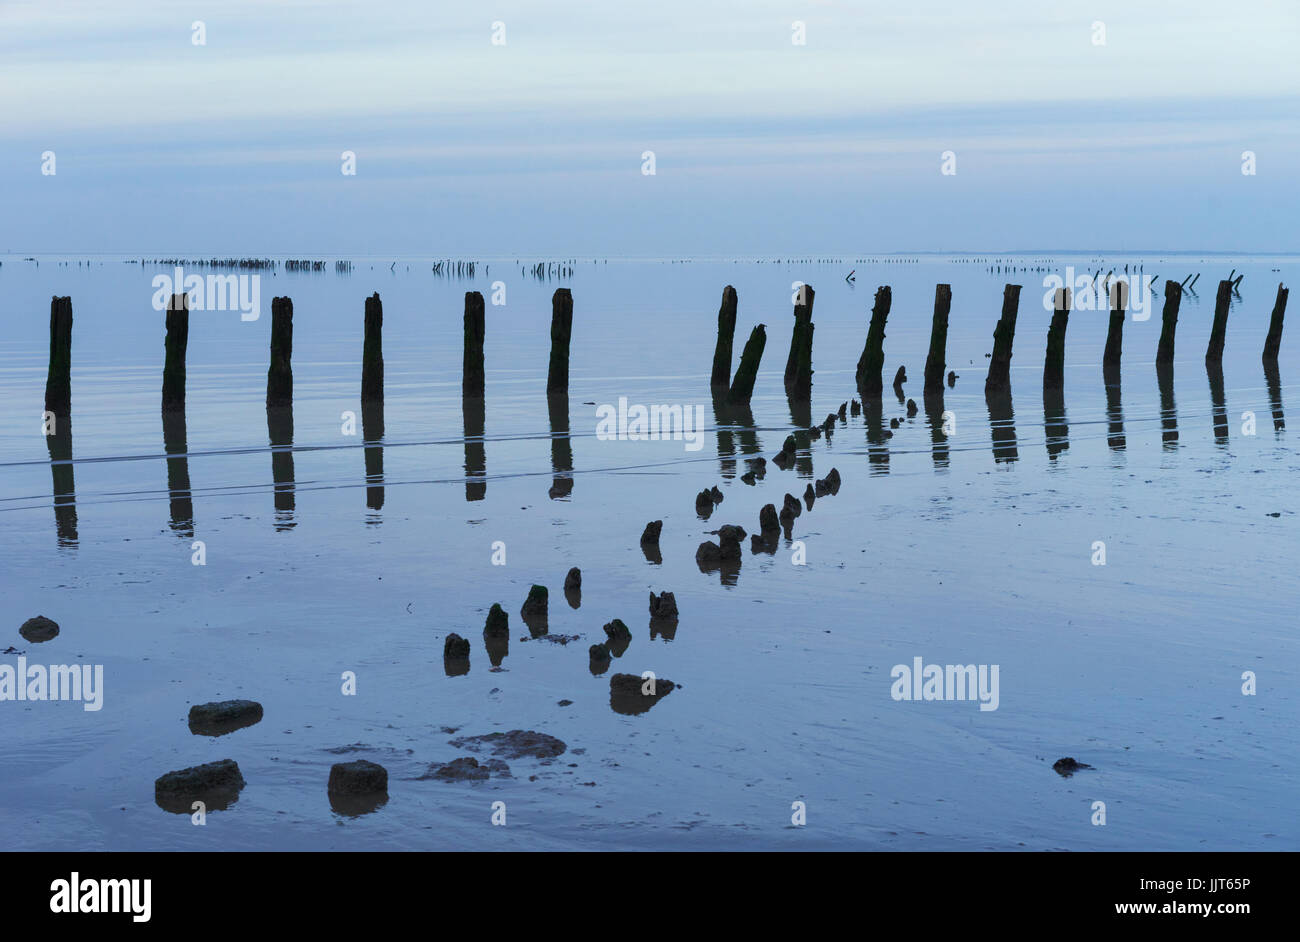 A criss-cross pattern of poles along the Frisian coast of the Wadden Sea, around sundown. Stock Photo